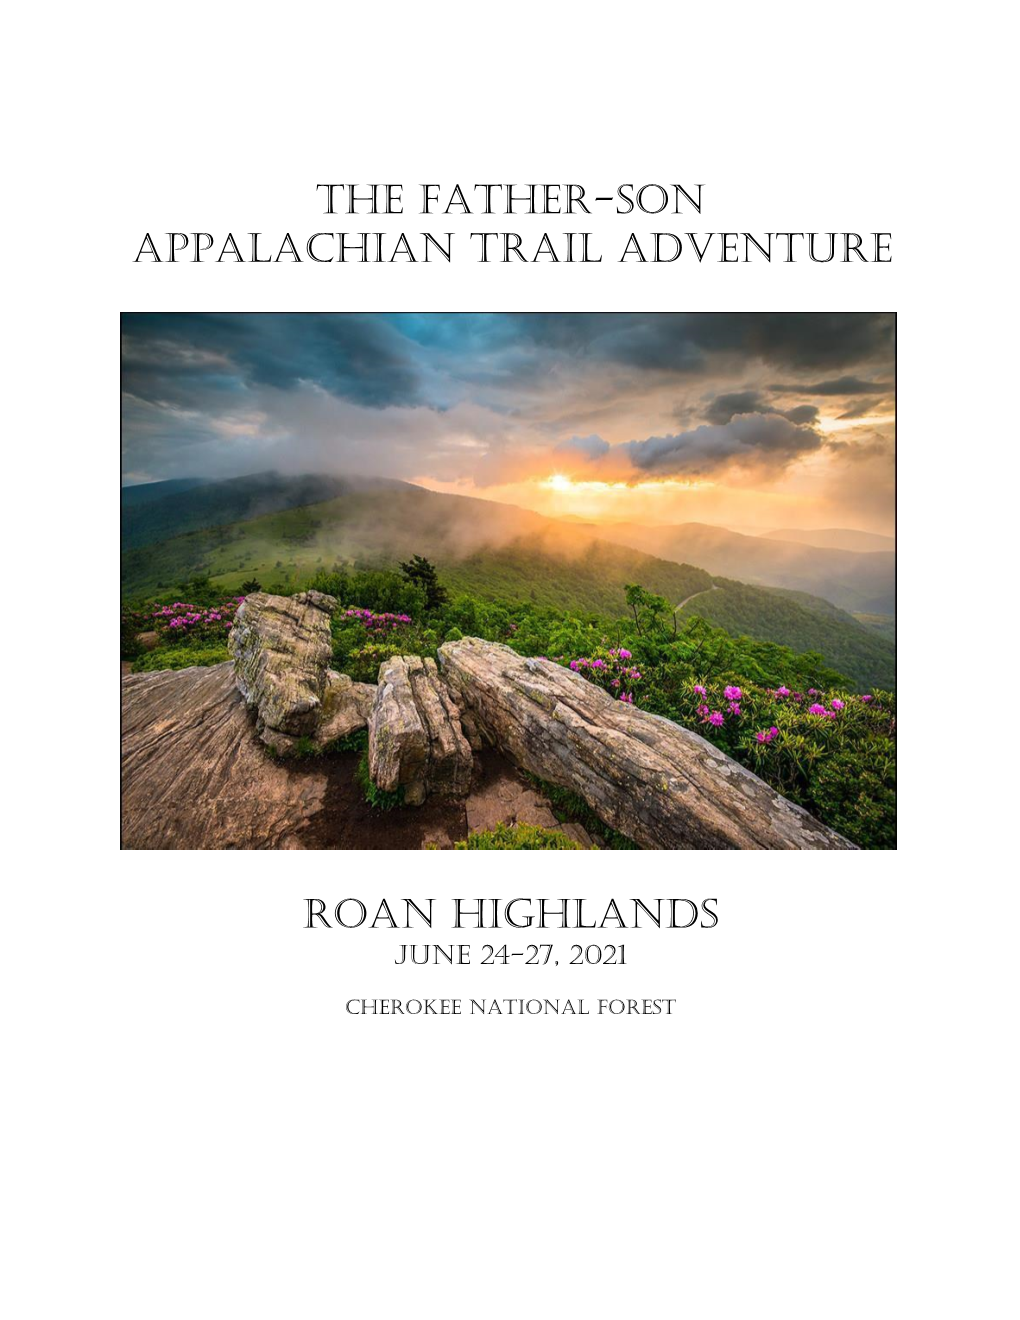 The Father-Son Appalachian Trail Adventure